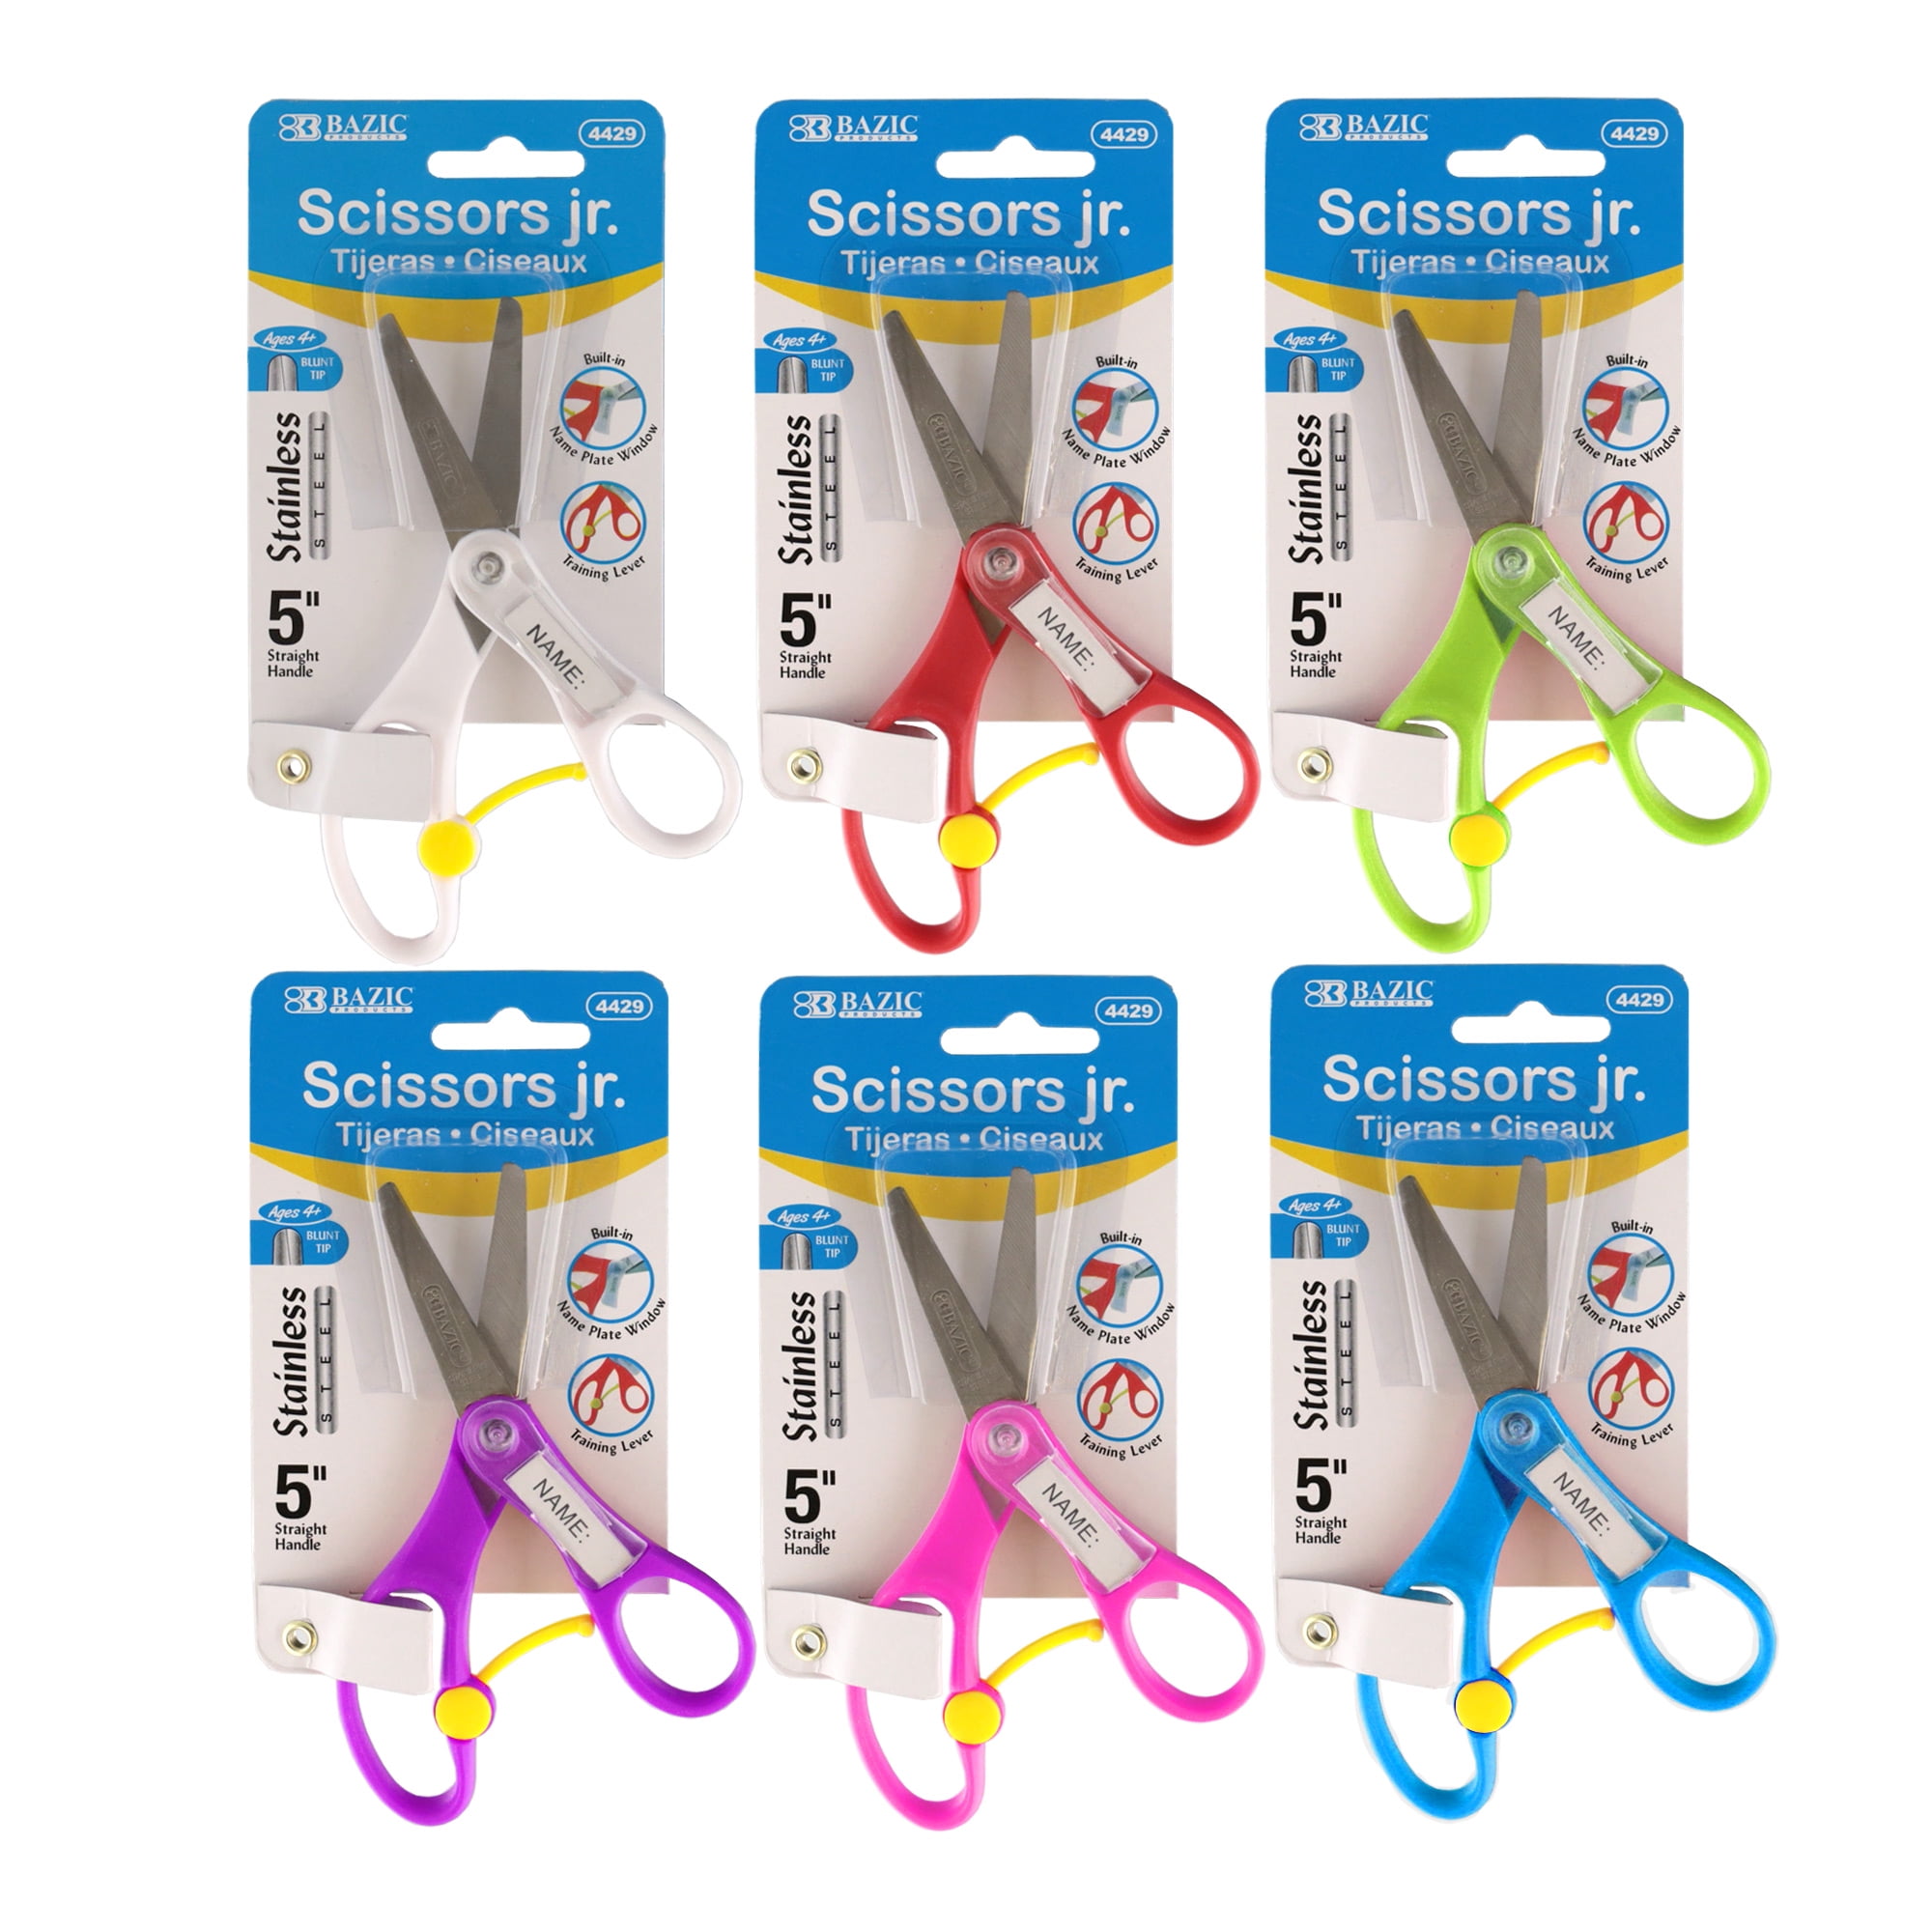 5.5 Left-Handed Kids Scissors 3 Pack,Scissors for School Kids with Comfort  Grip Handles Sharp Blade Blunt Student Scissors ages 4+,Child Small